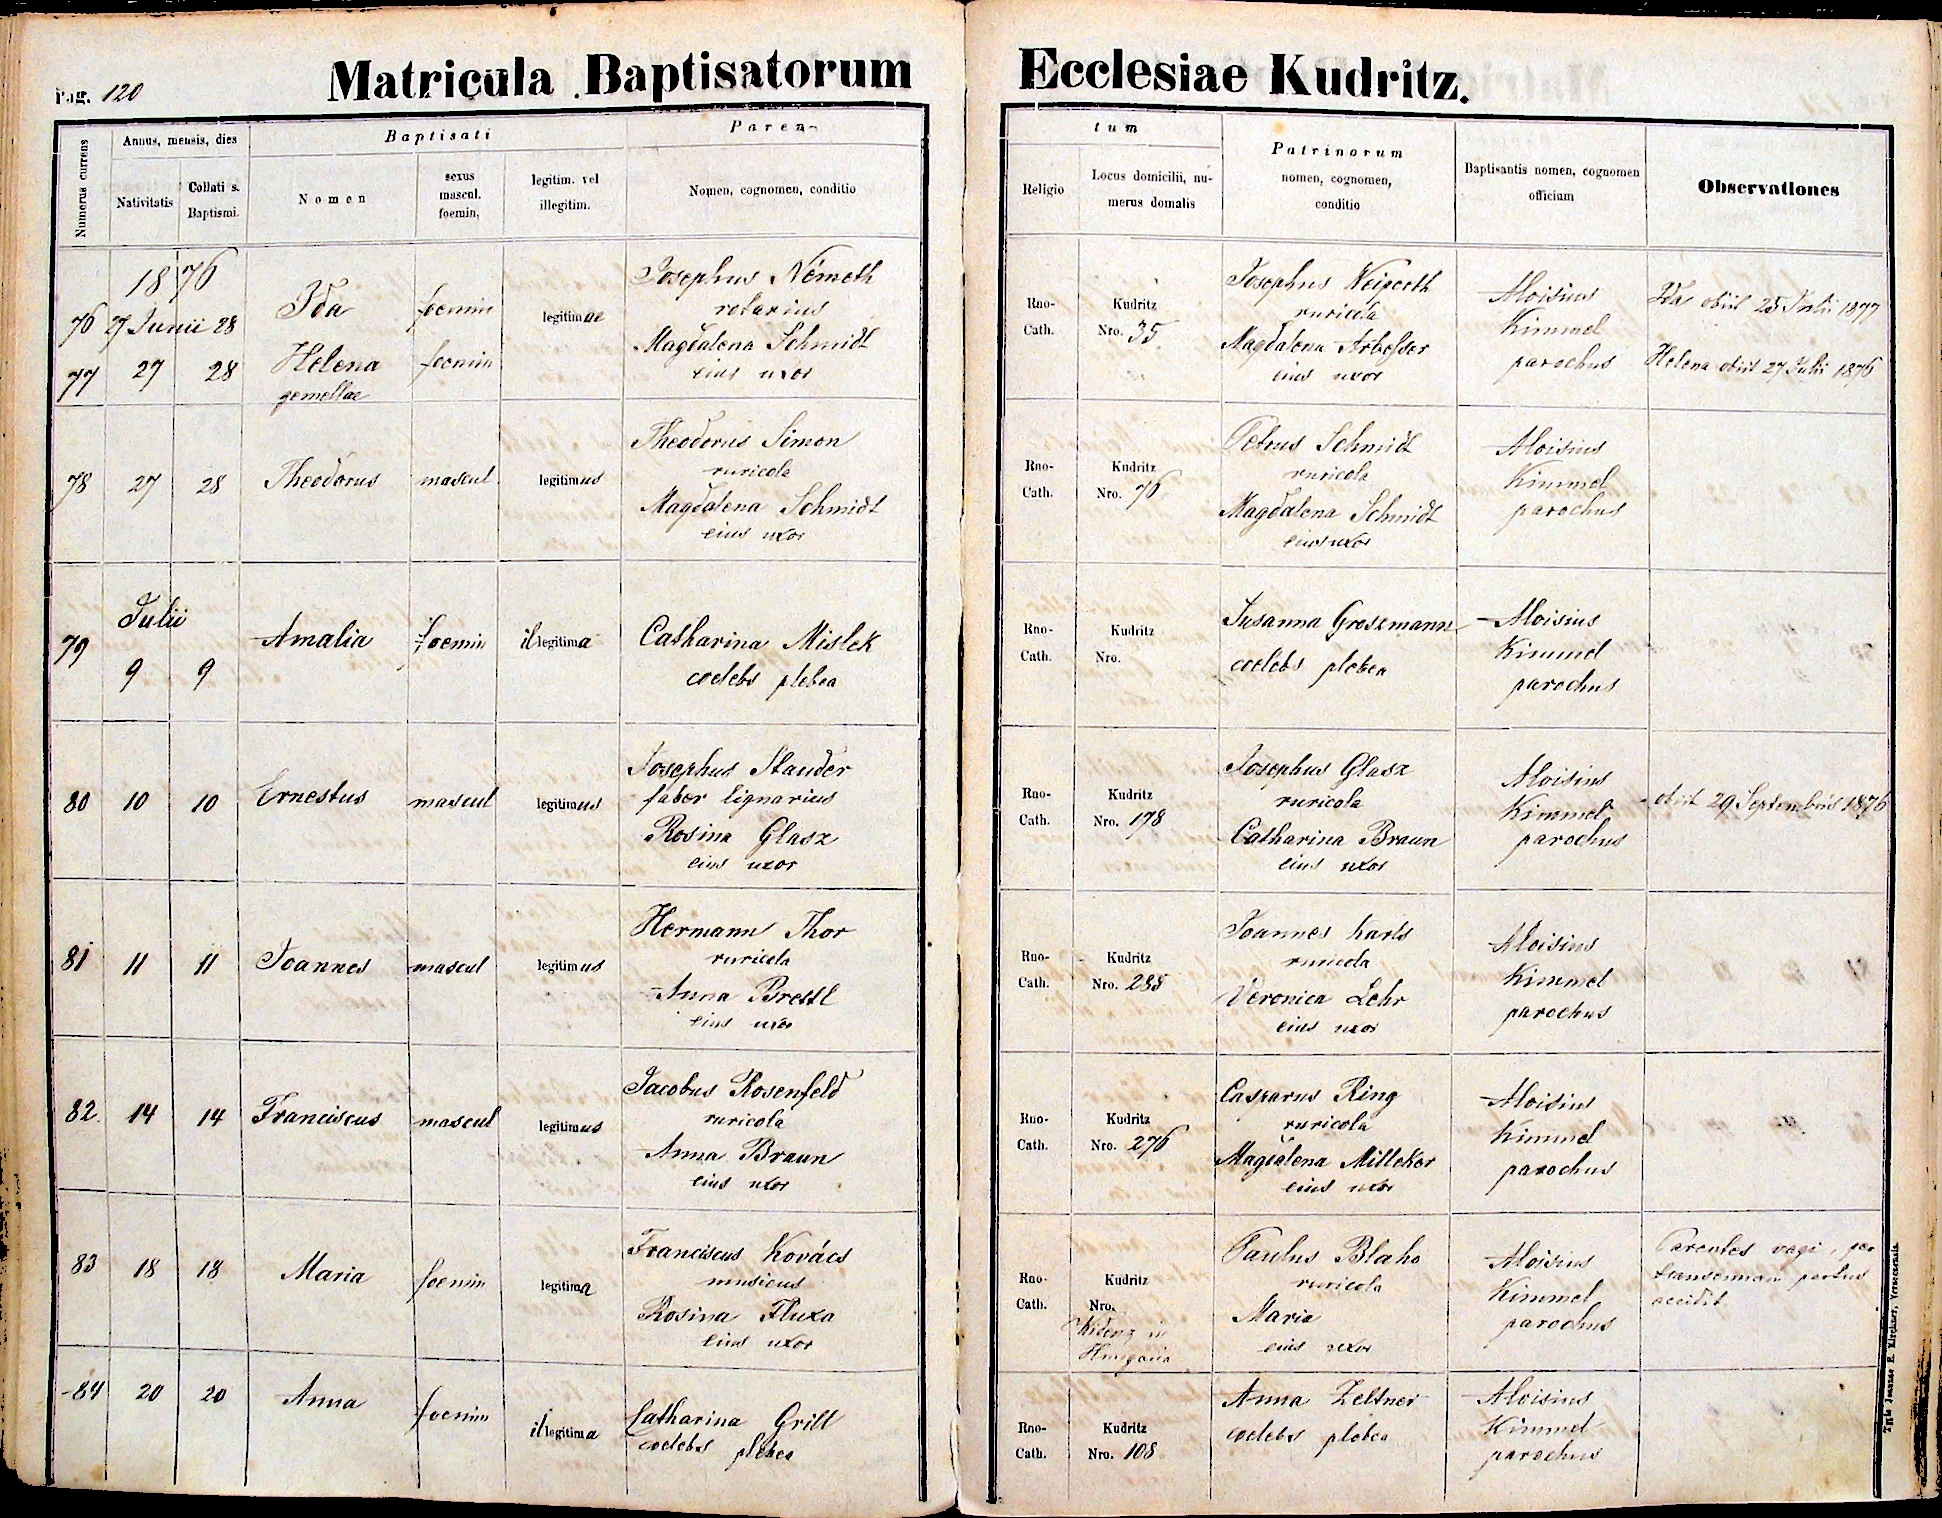 images/church_records/BIRTHS/1870-1879B/1876/120